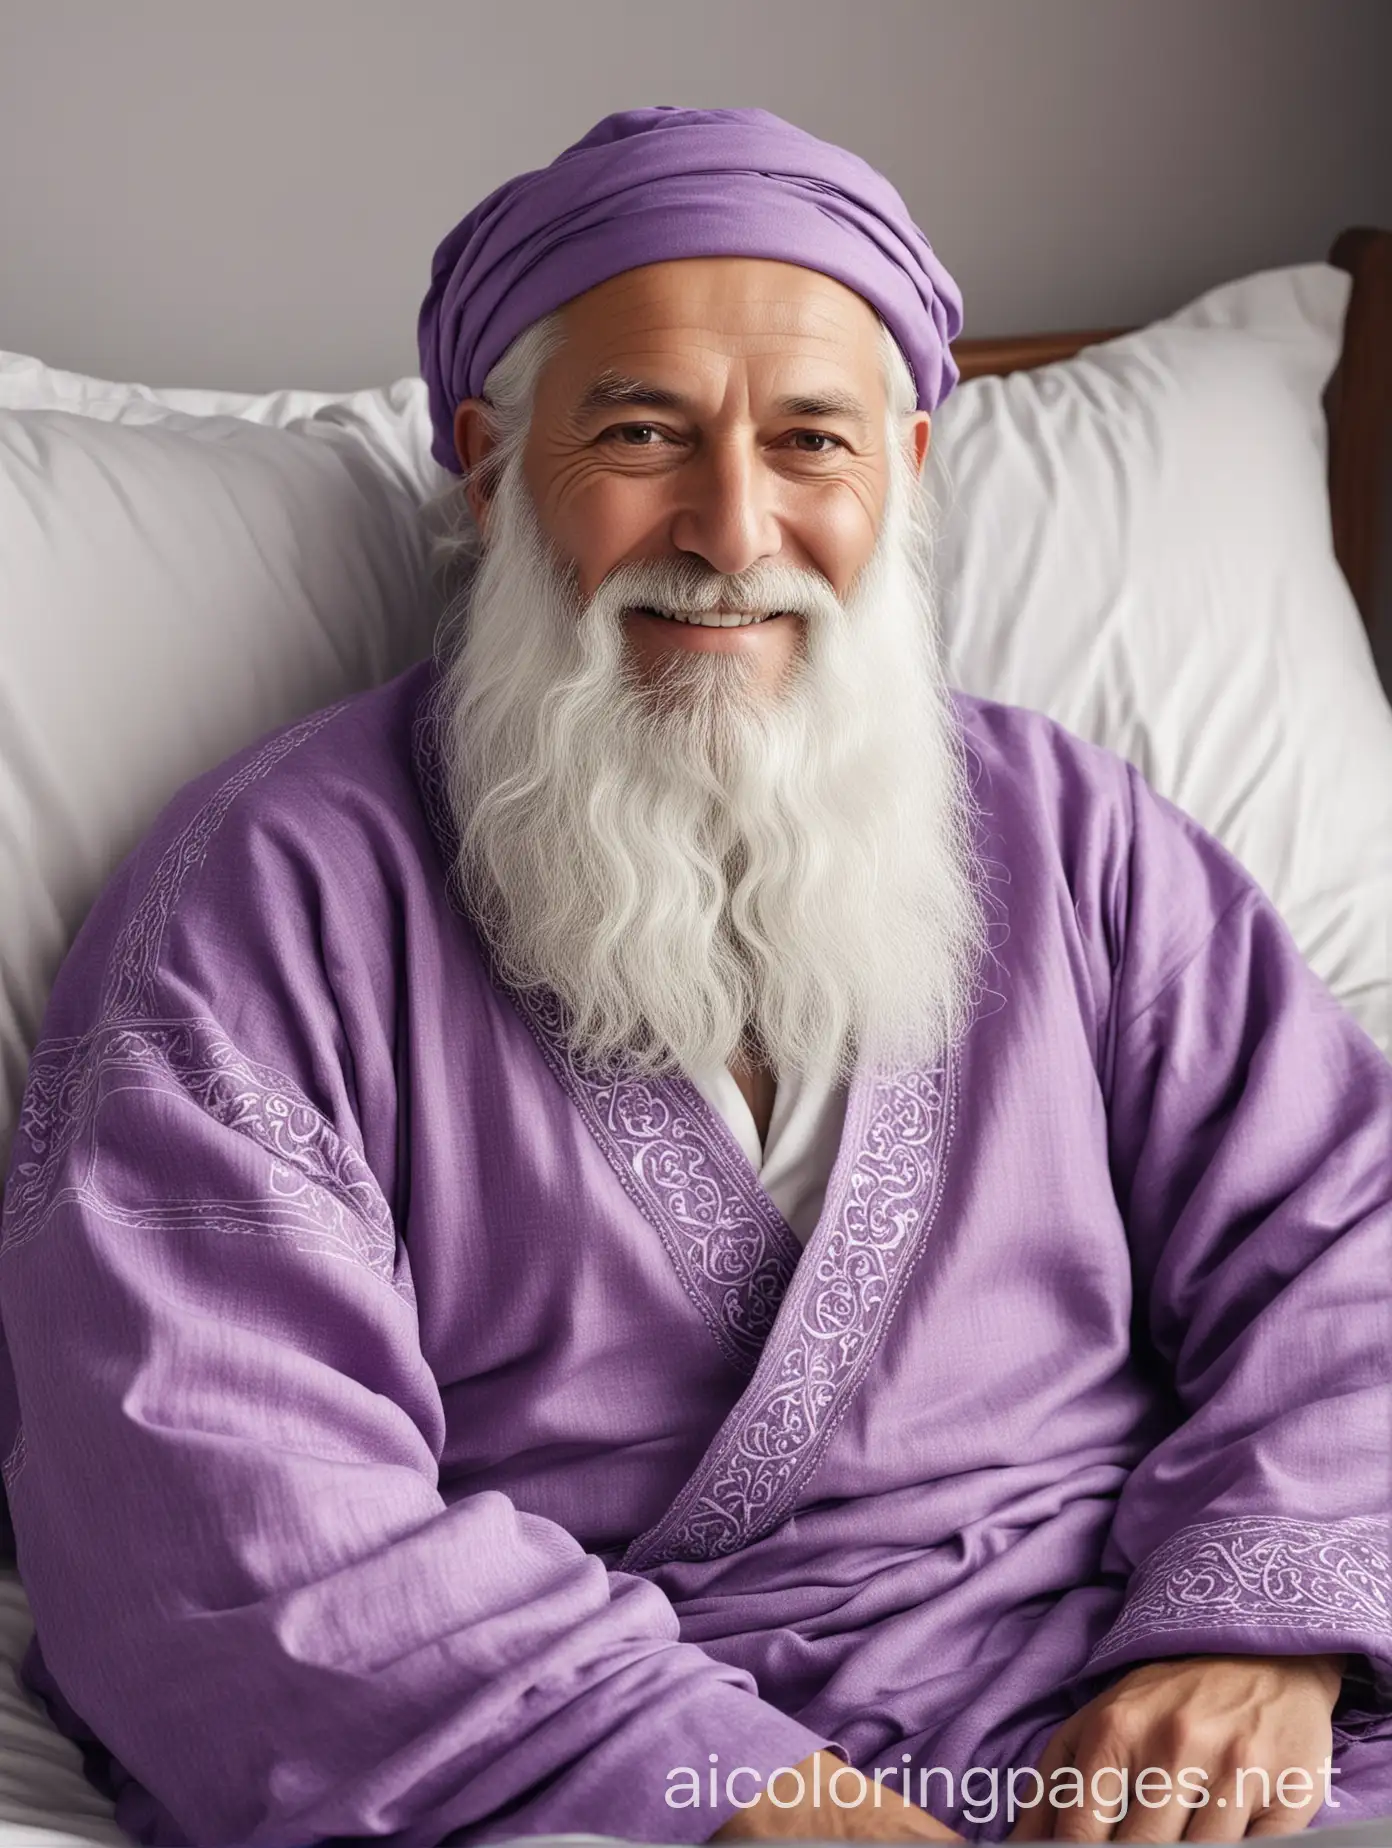 Islamic-Era-MiddleAged-Man-Smiling-in-Purple-Robes-Vintage-4K-Portrait